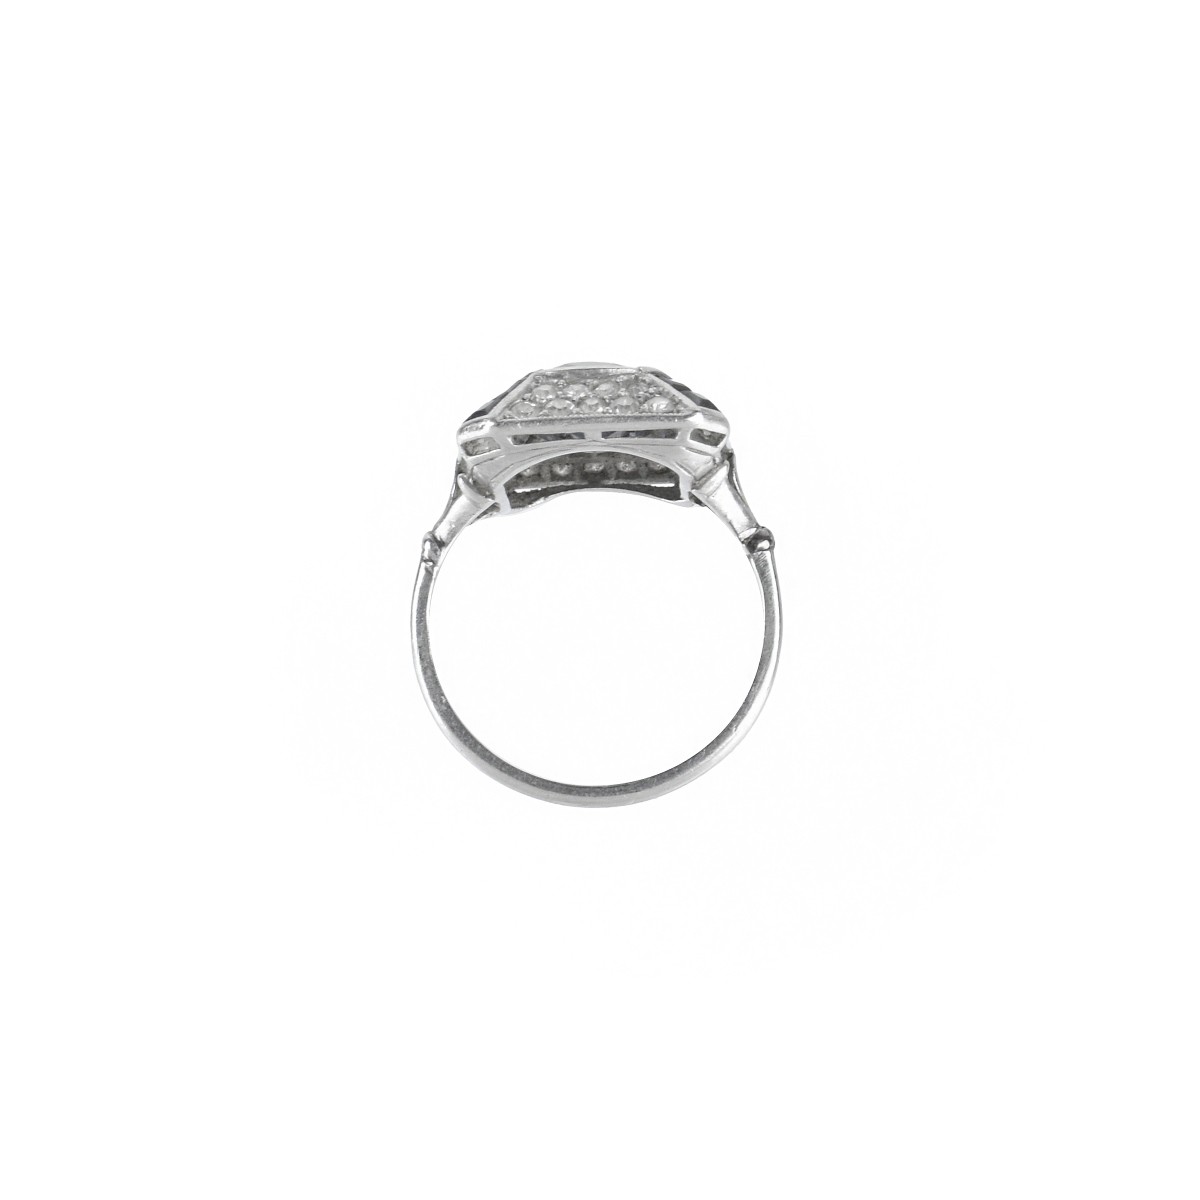 Deco Sapphire, Diamond and Platinum Ring